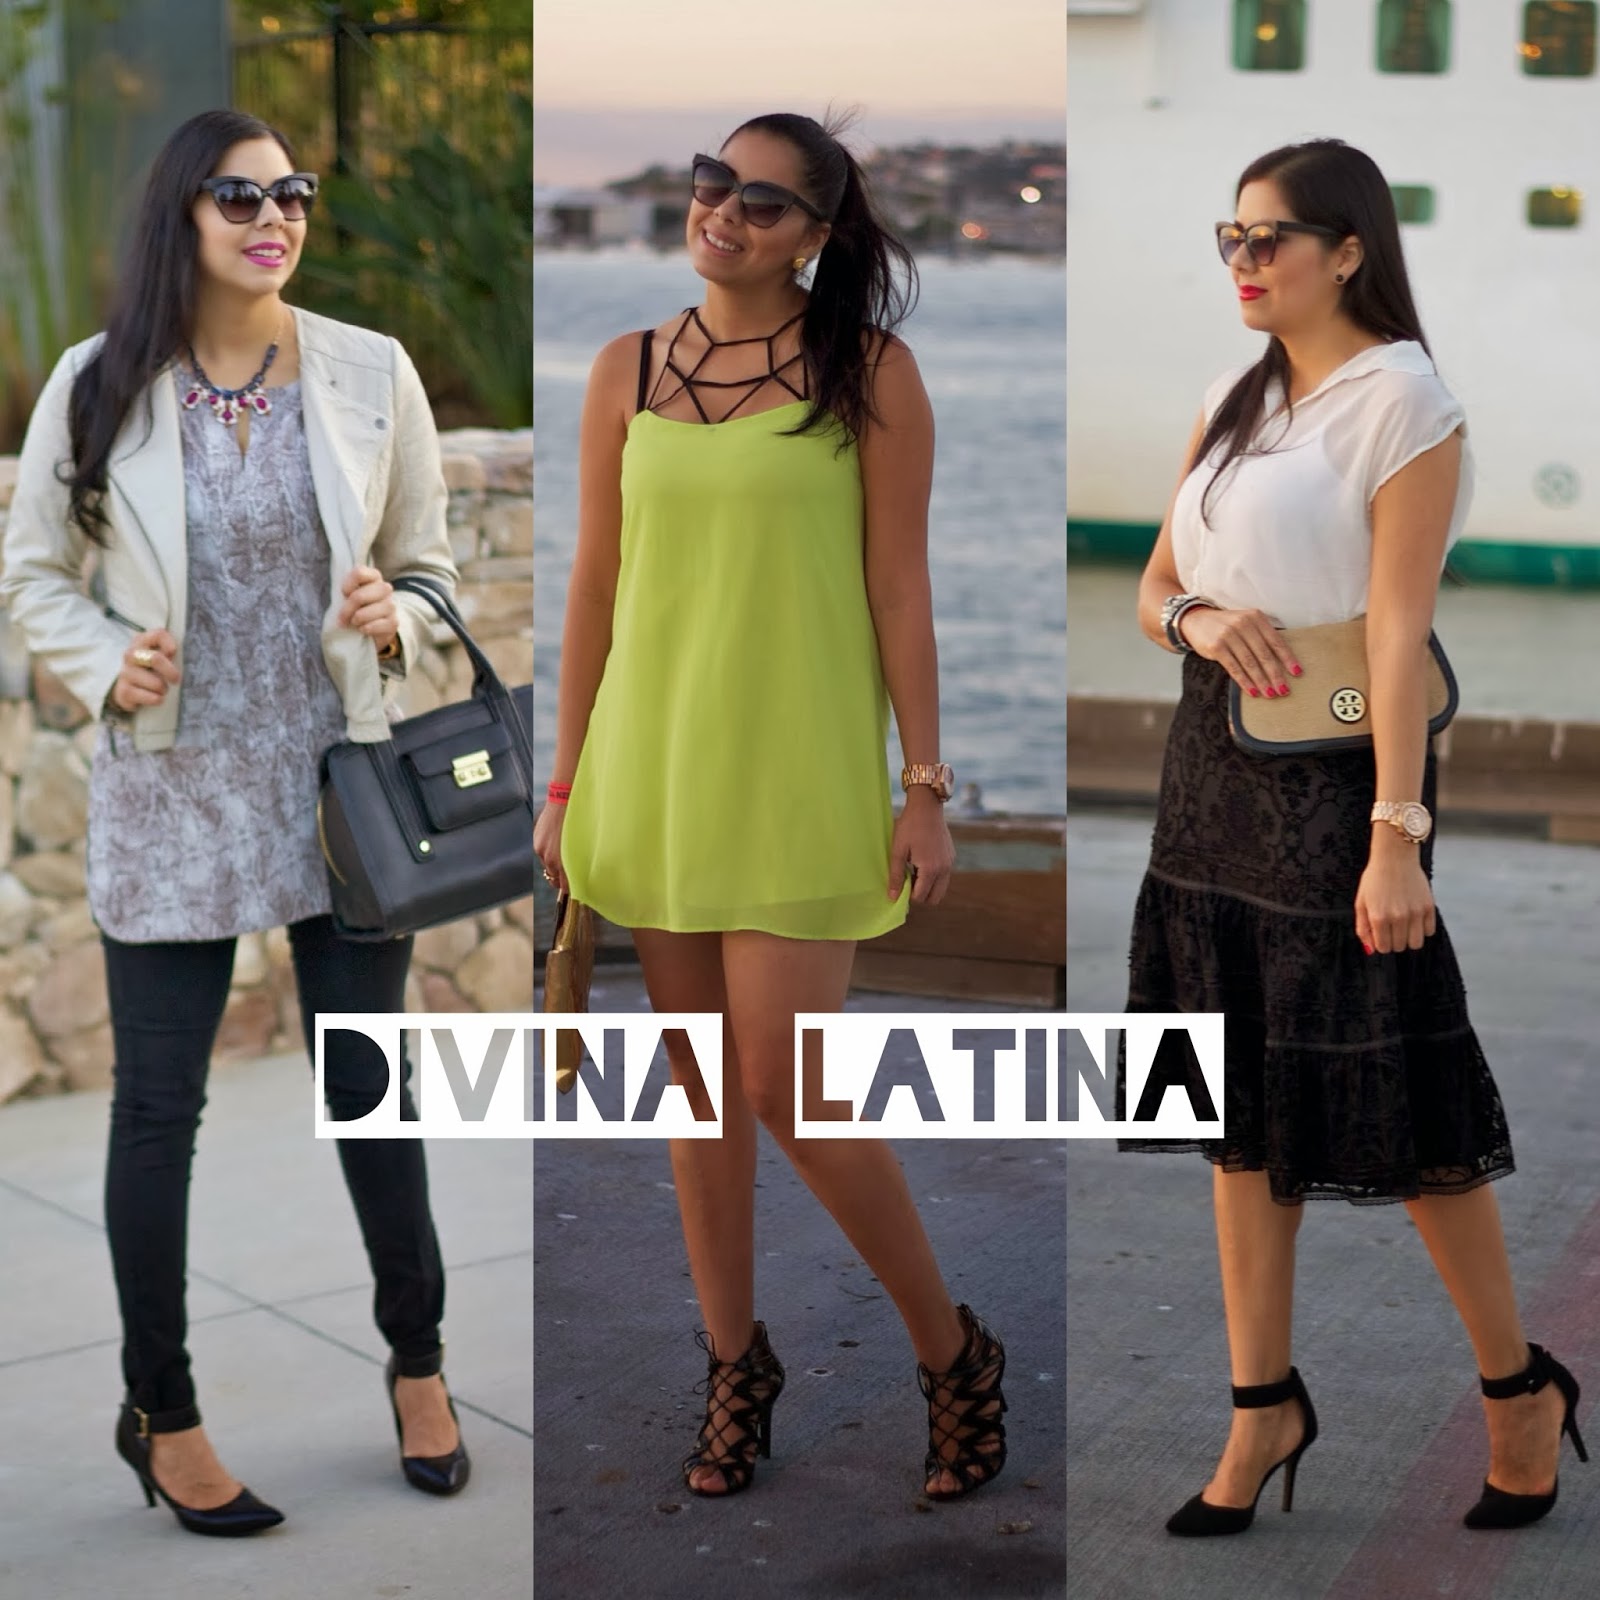 Feelin' Divina Latina & GIVEAWAY